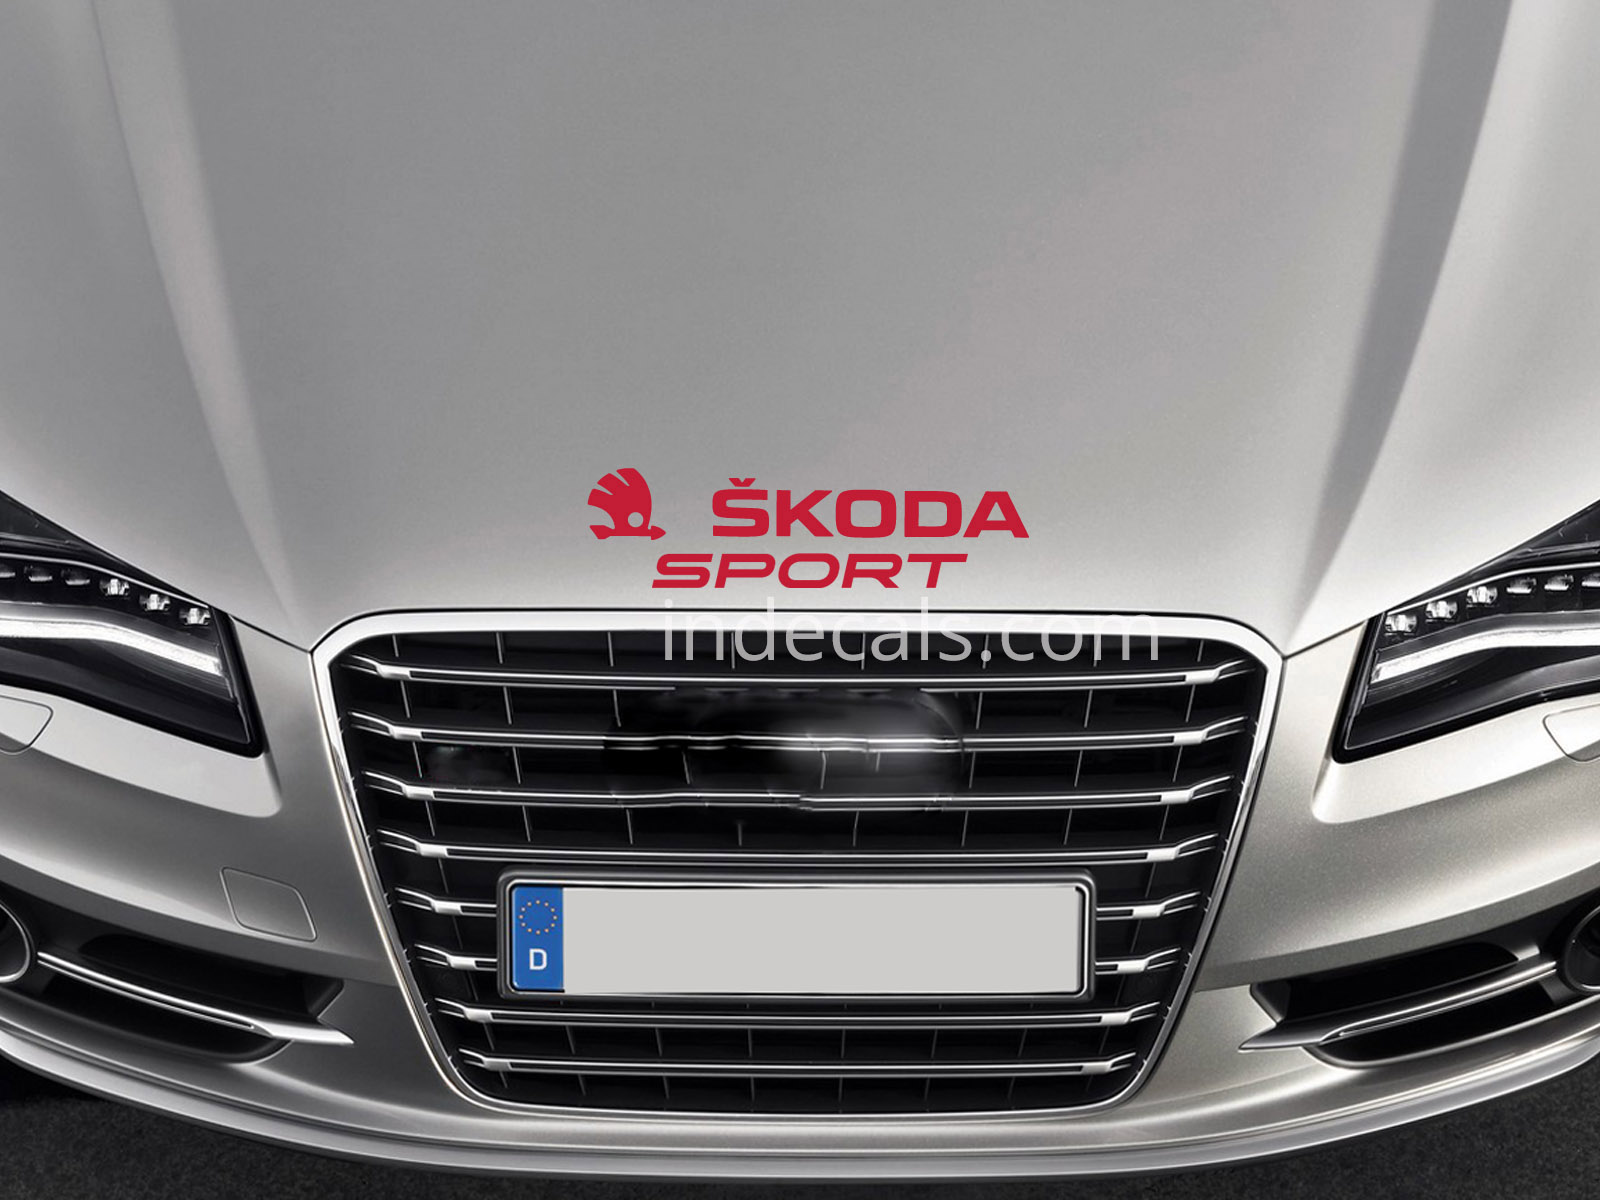 1 x Skoda Sport Sticker for Bonnet - Red